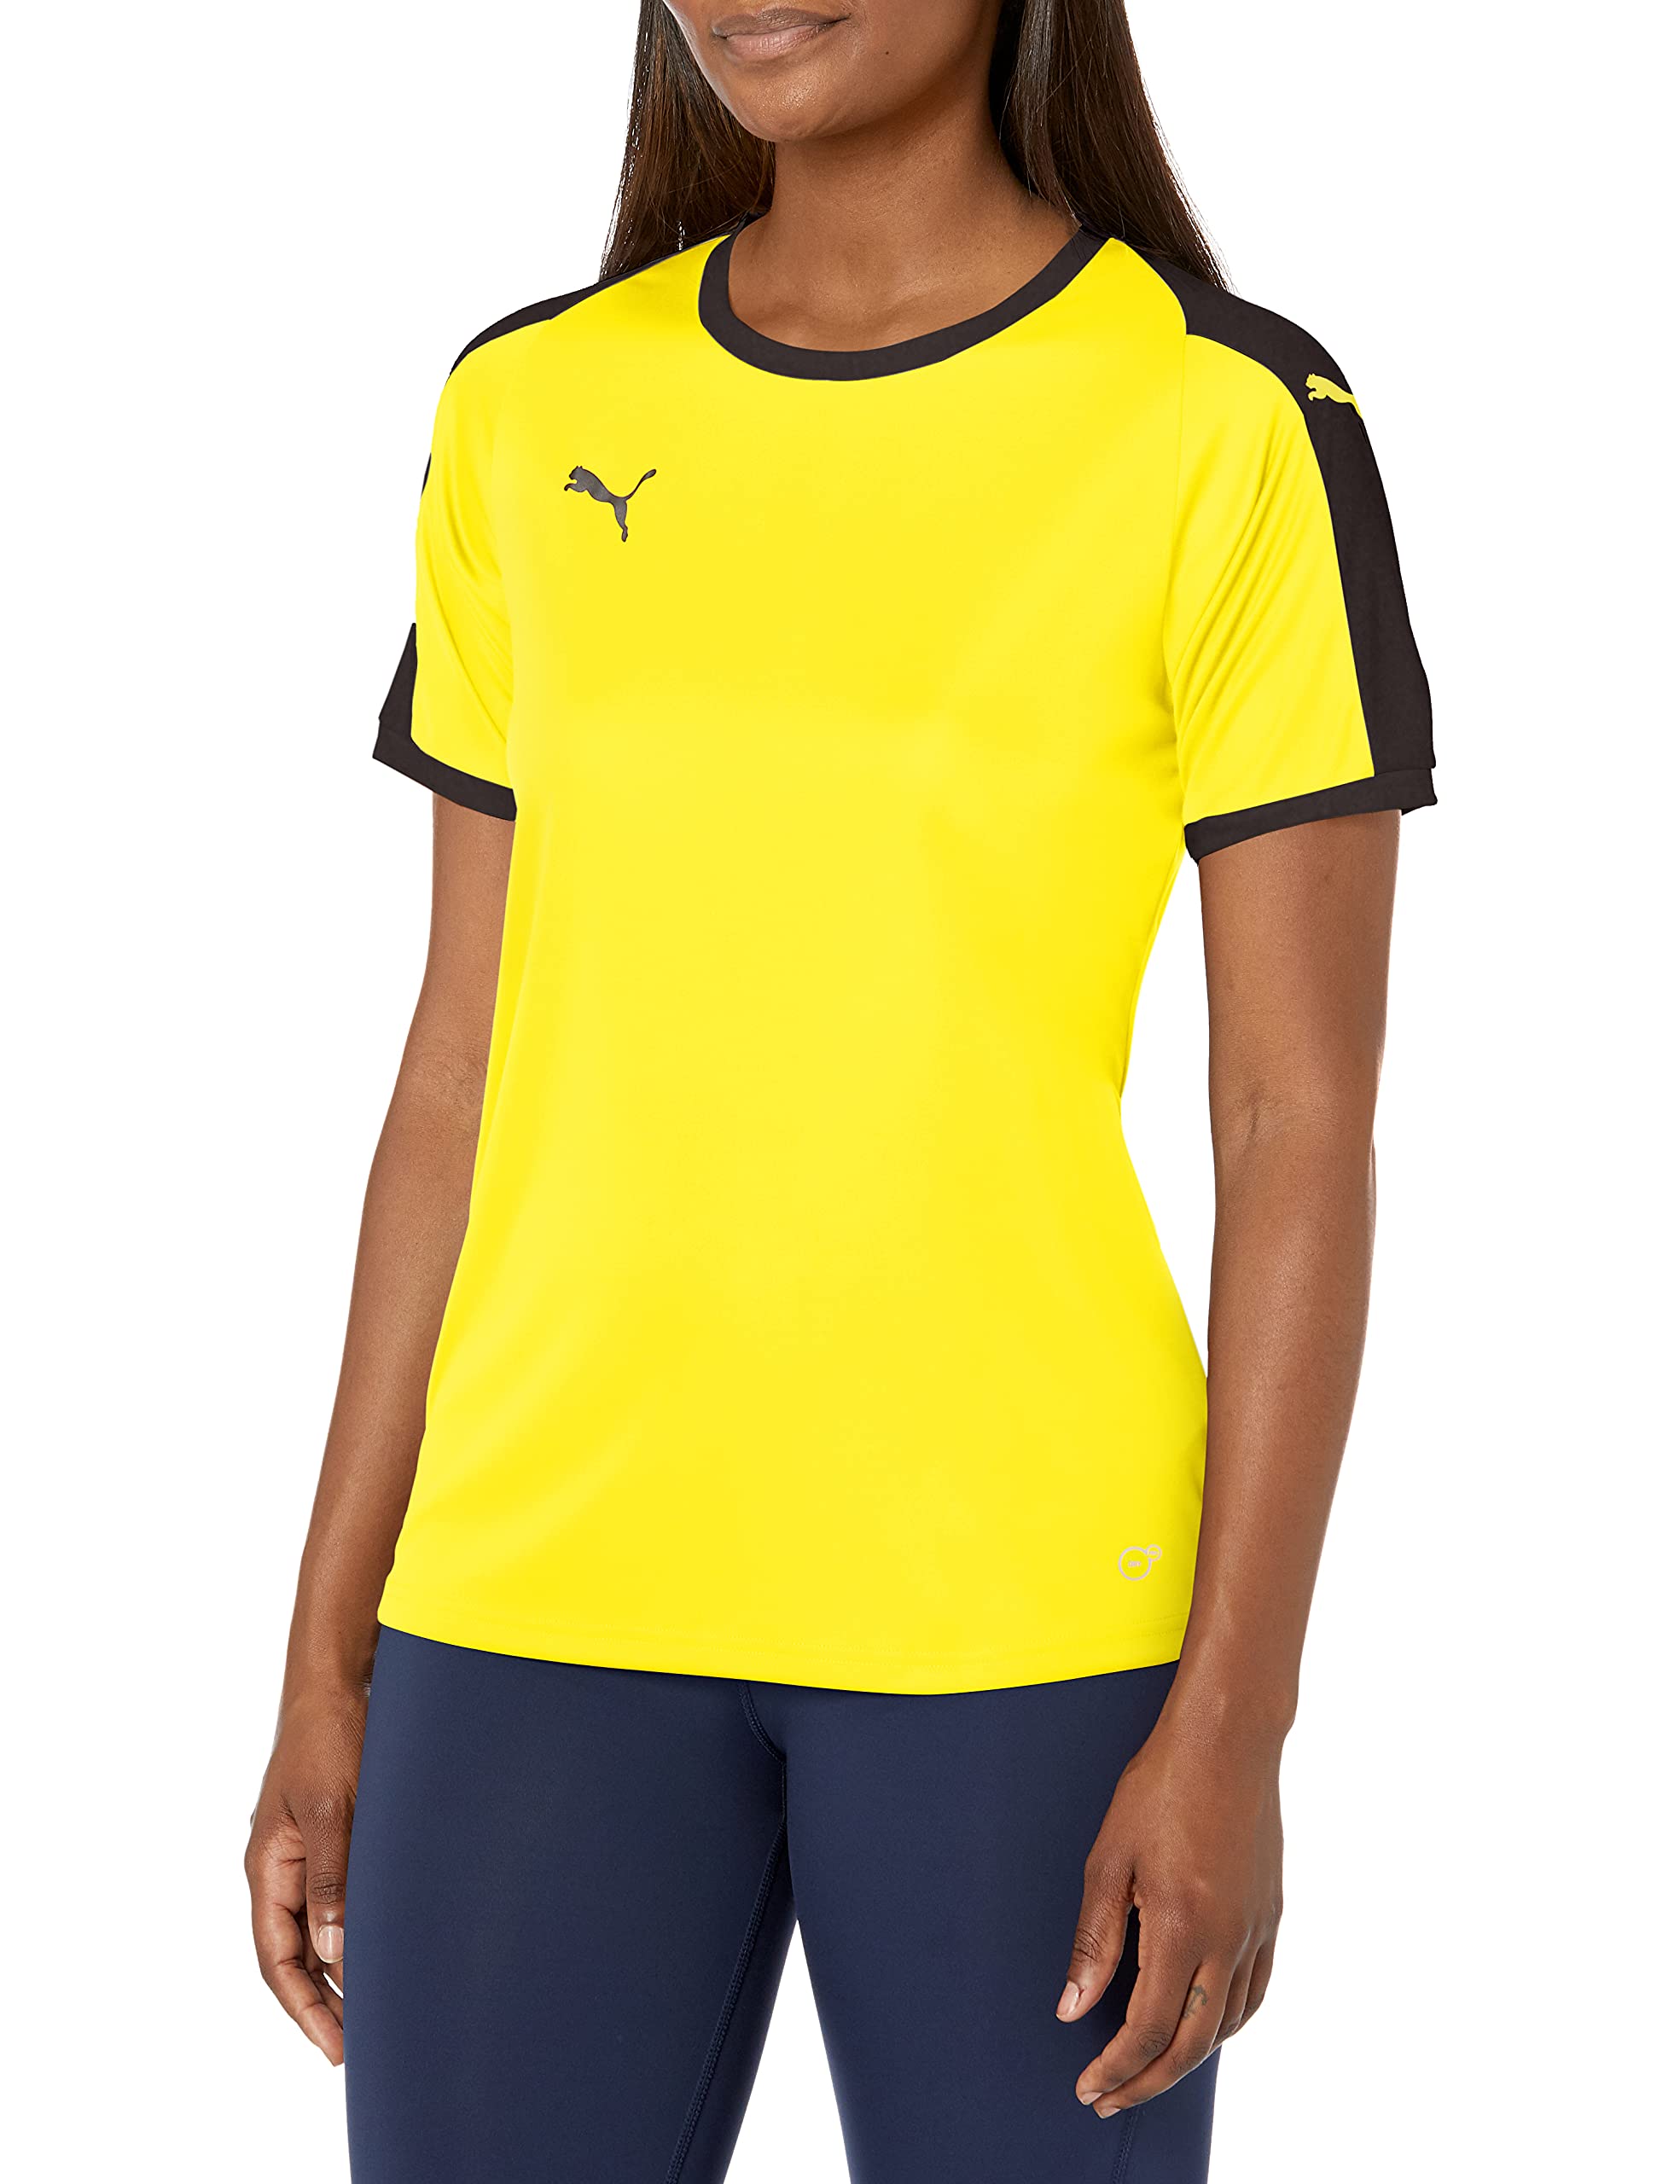 PUMA Womens Liga Jersey - Cyber Yellow/Black - Small